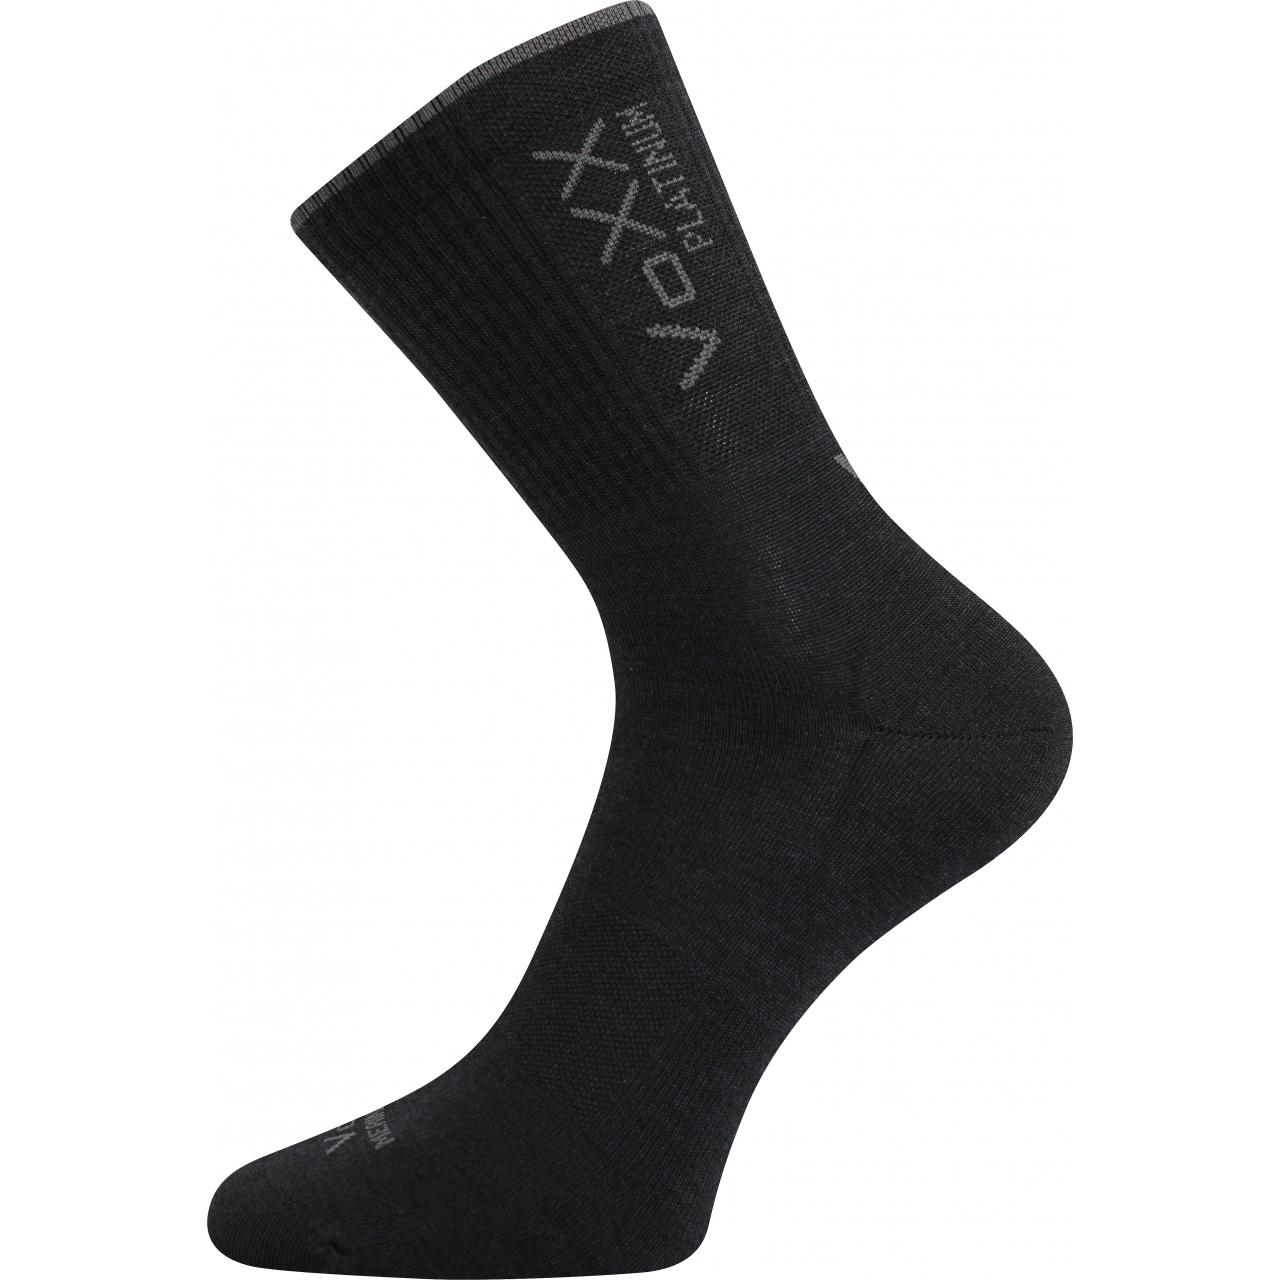 Ponožky unisex klasické Voxx Radius - černé, 35-38